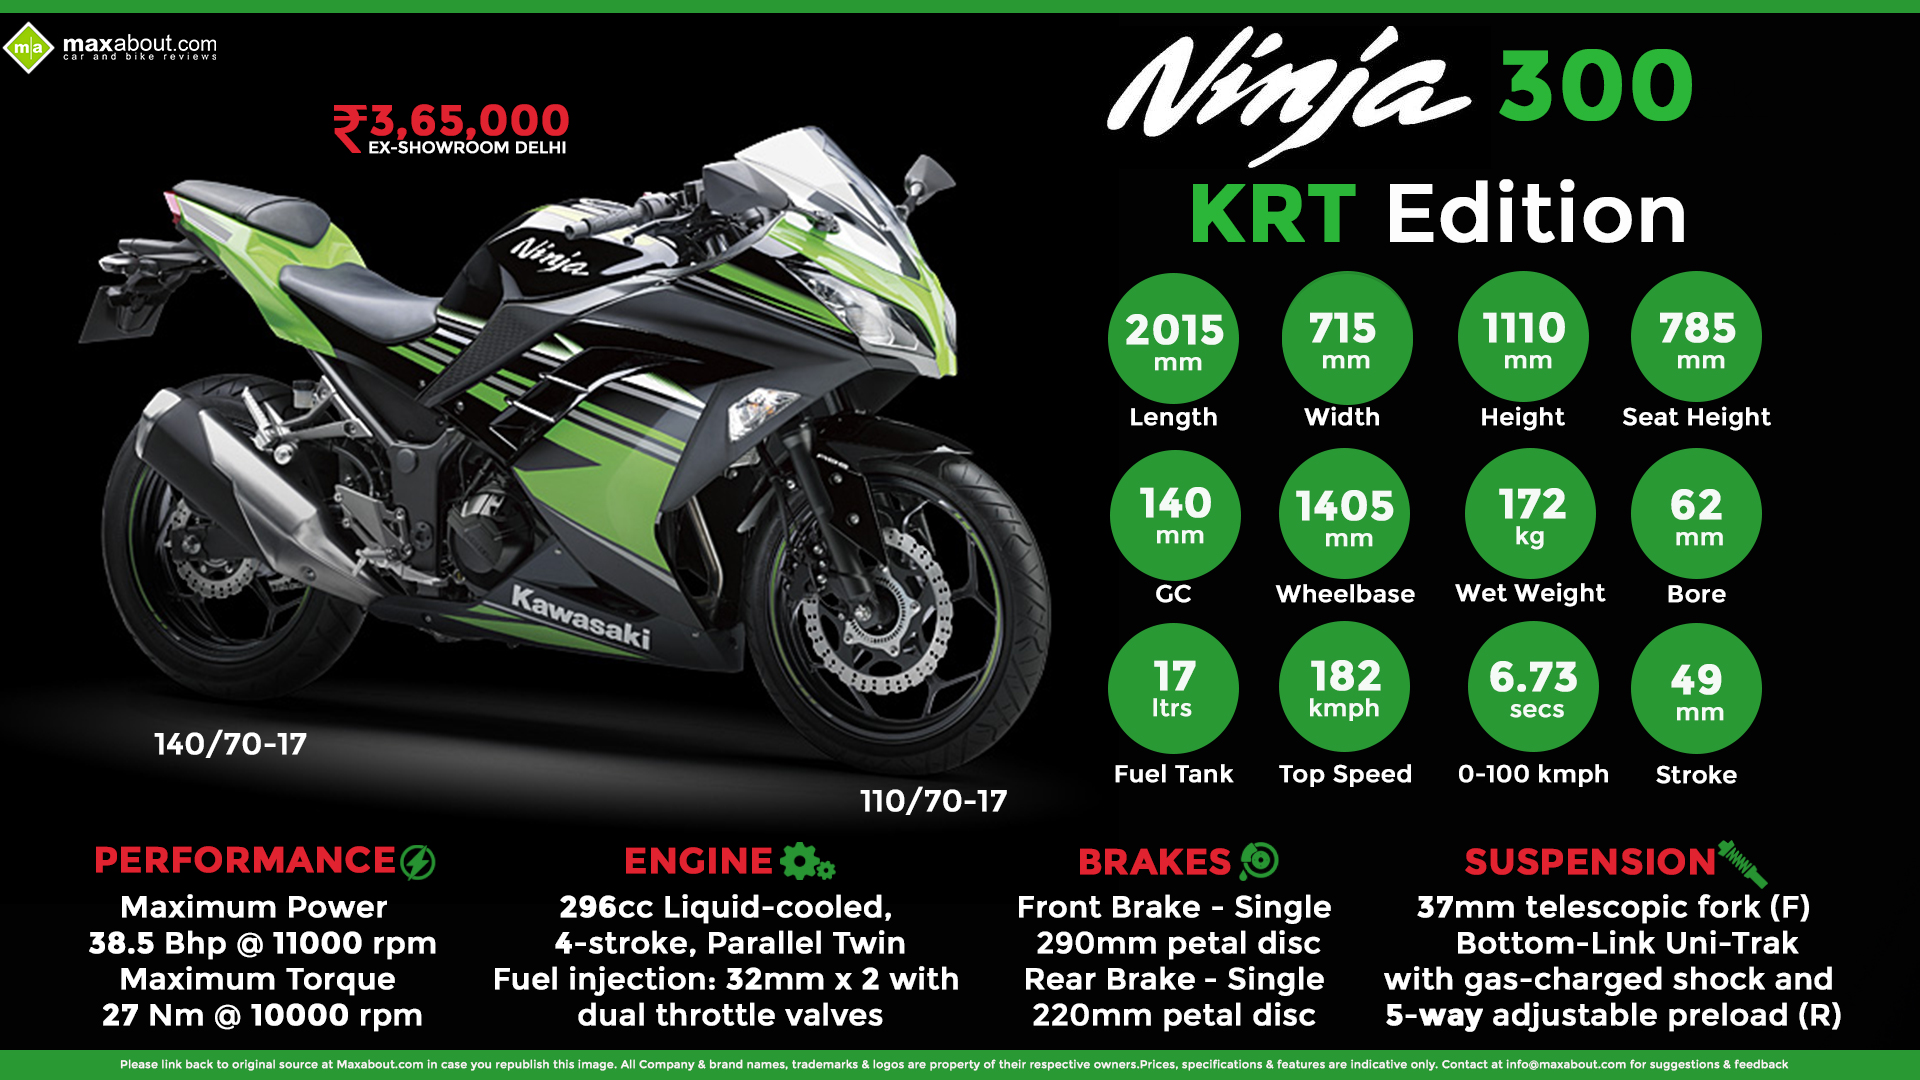 Fast Facts About Kawasaki Ninja 300 KRT Edition